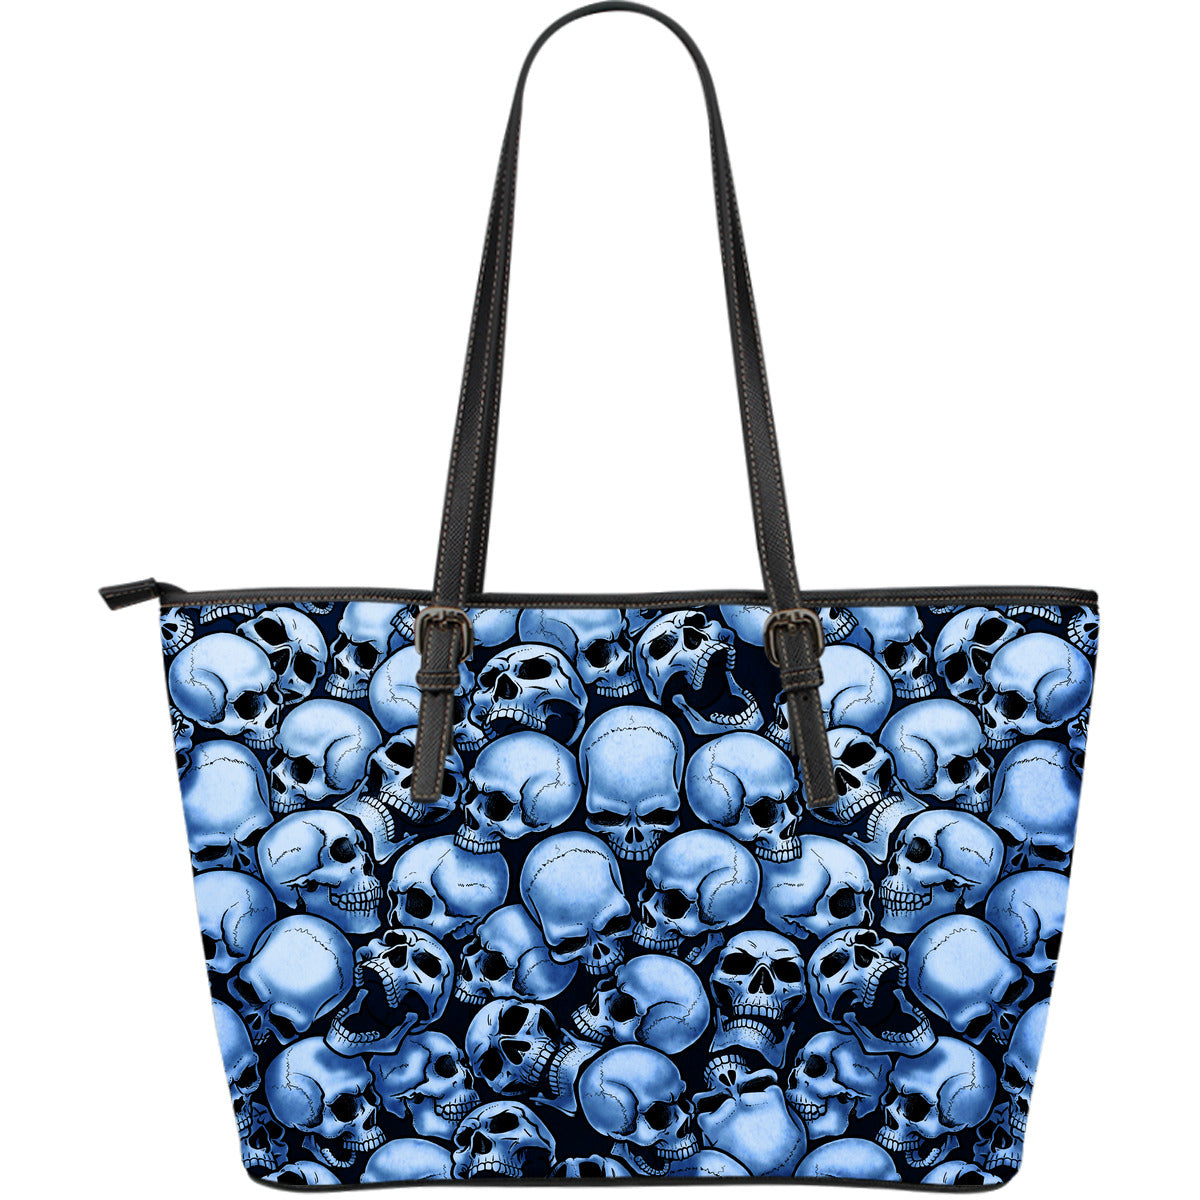 Skull Pile Large Leather Tote Bag - Blue